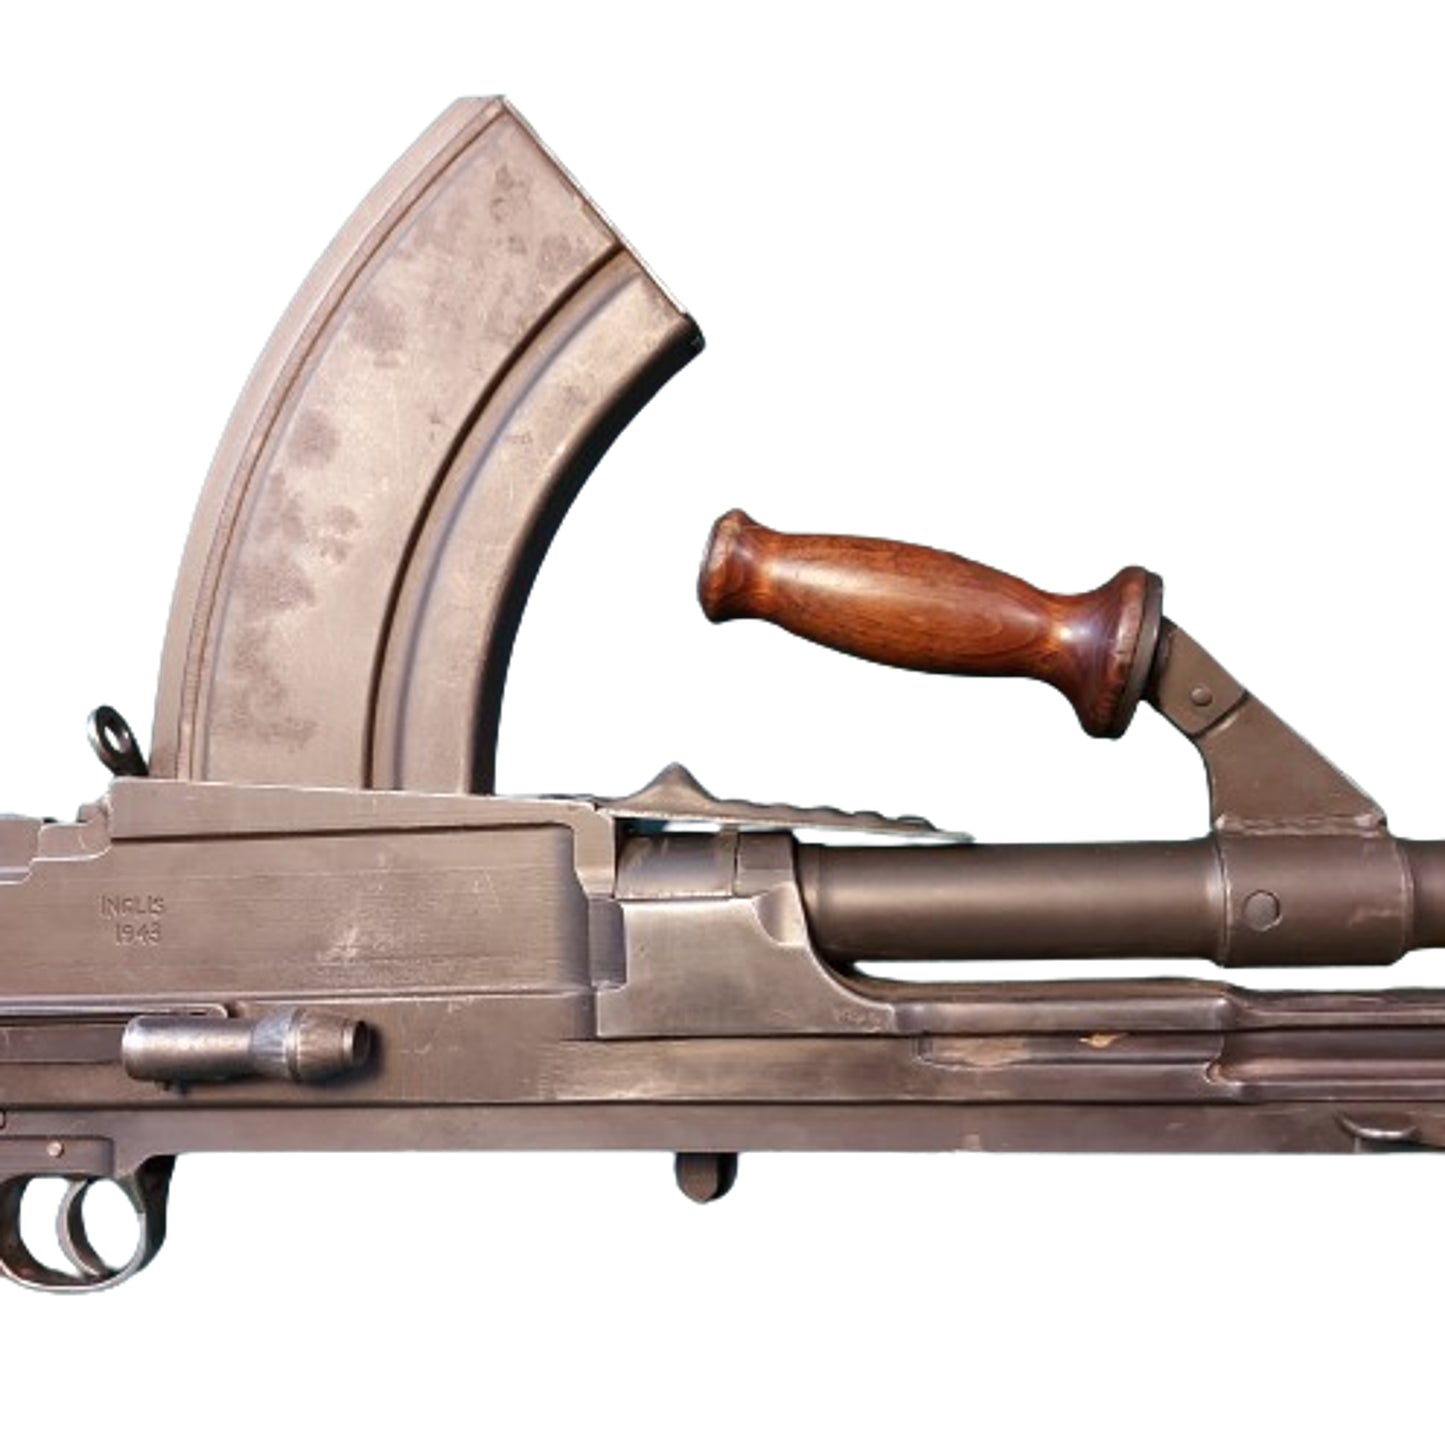 Deactivated WW2 Canadian Mk.I Bren Gun Inglis 1943